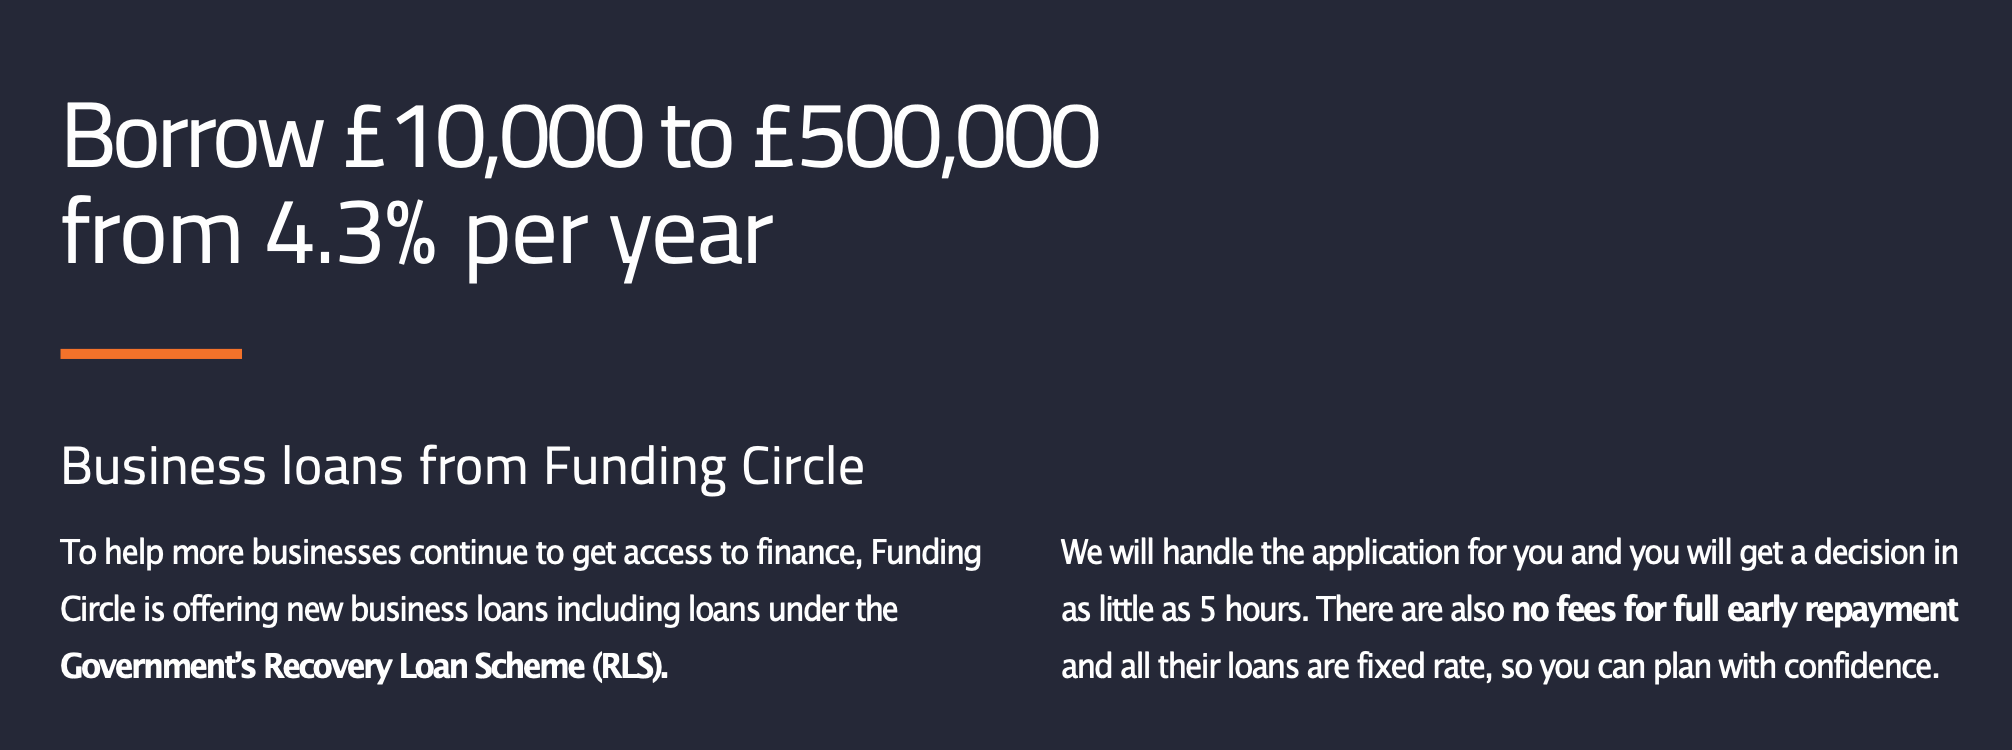 Funding Circle Business Loans